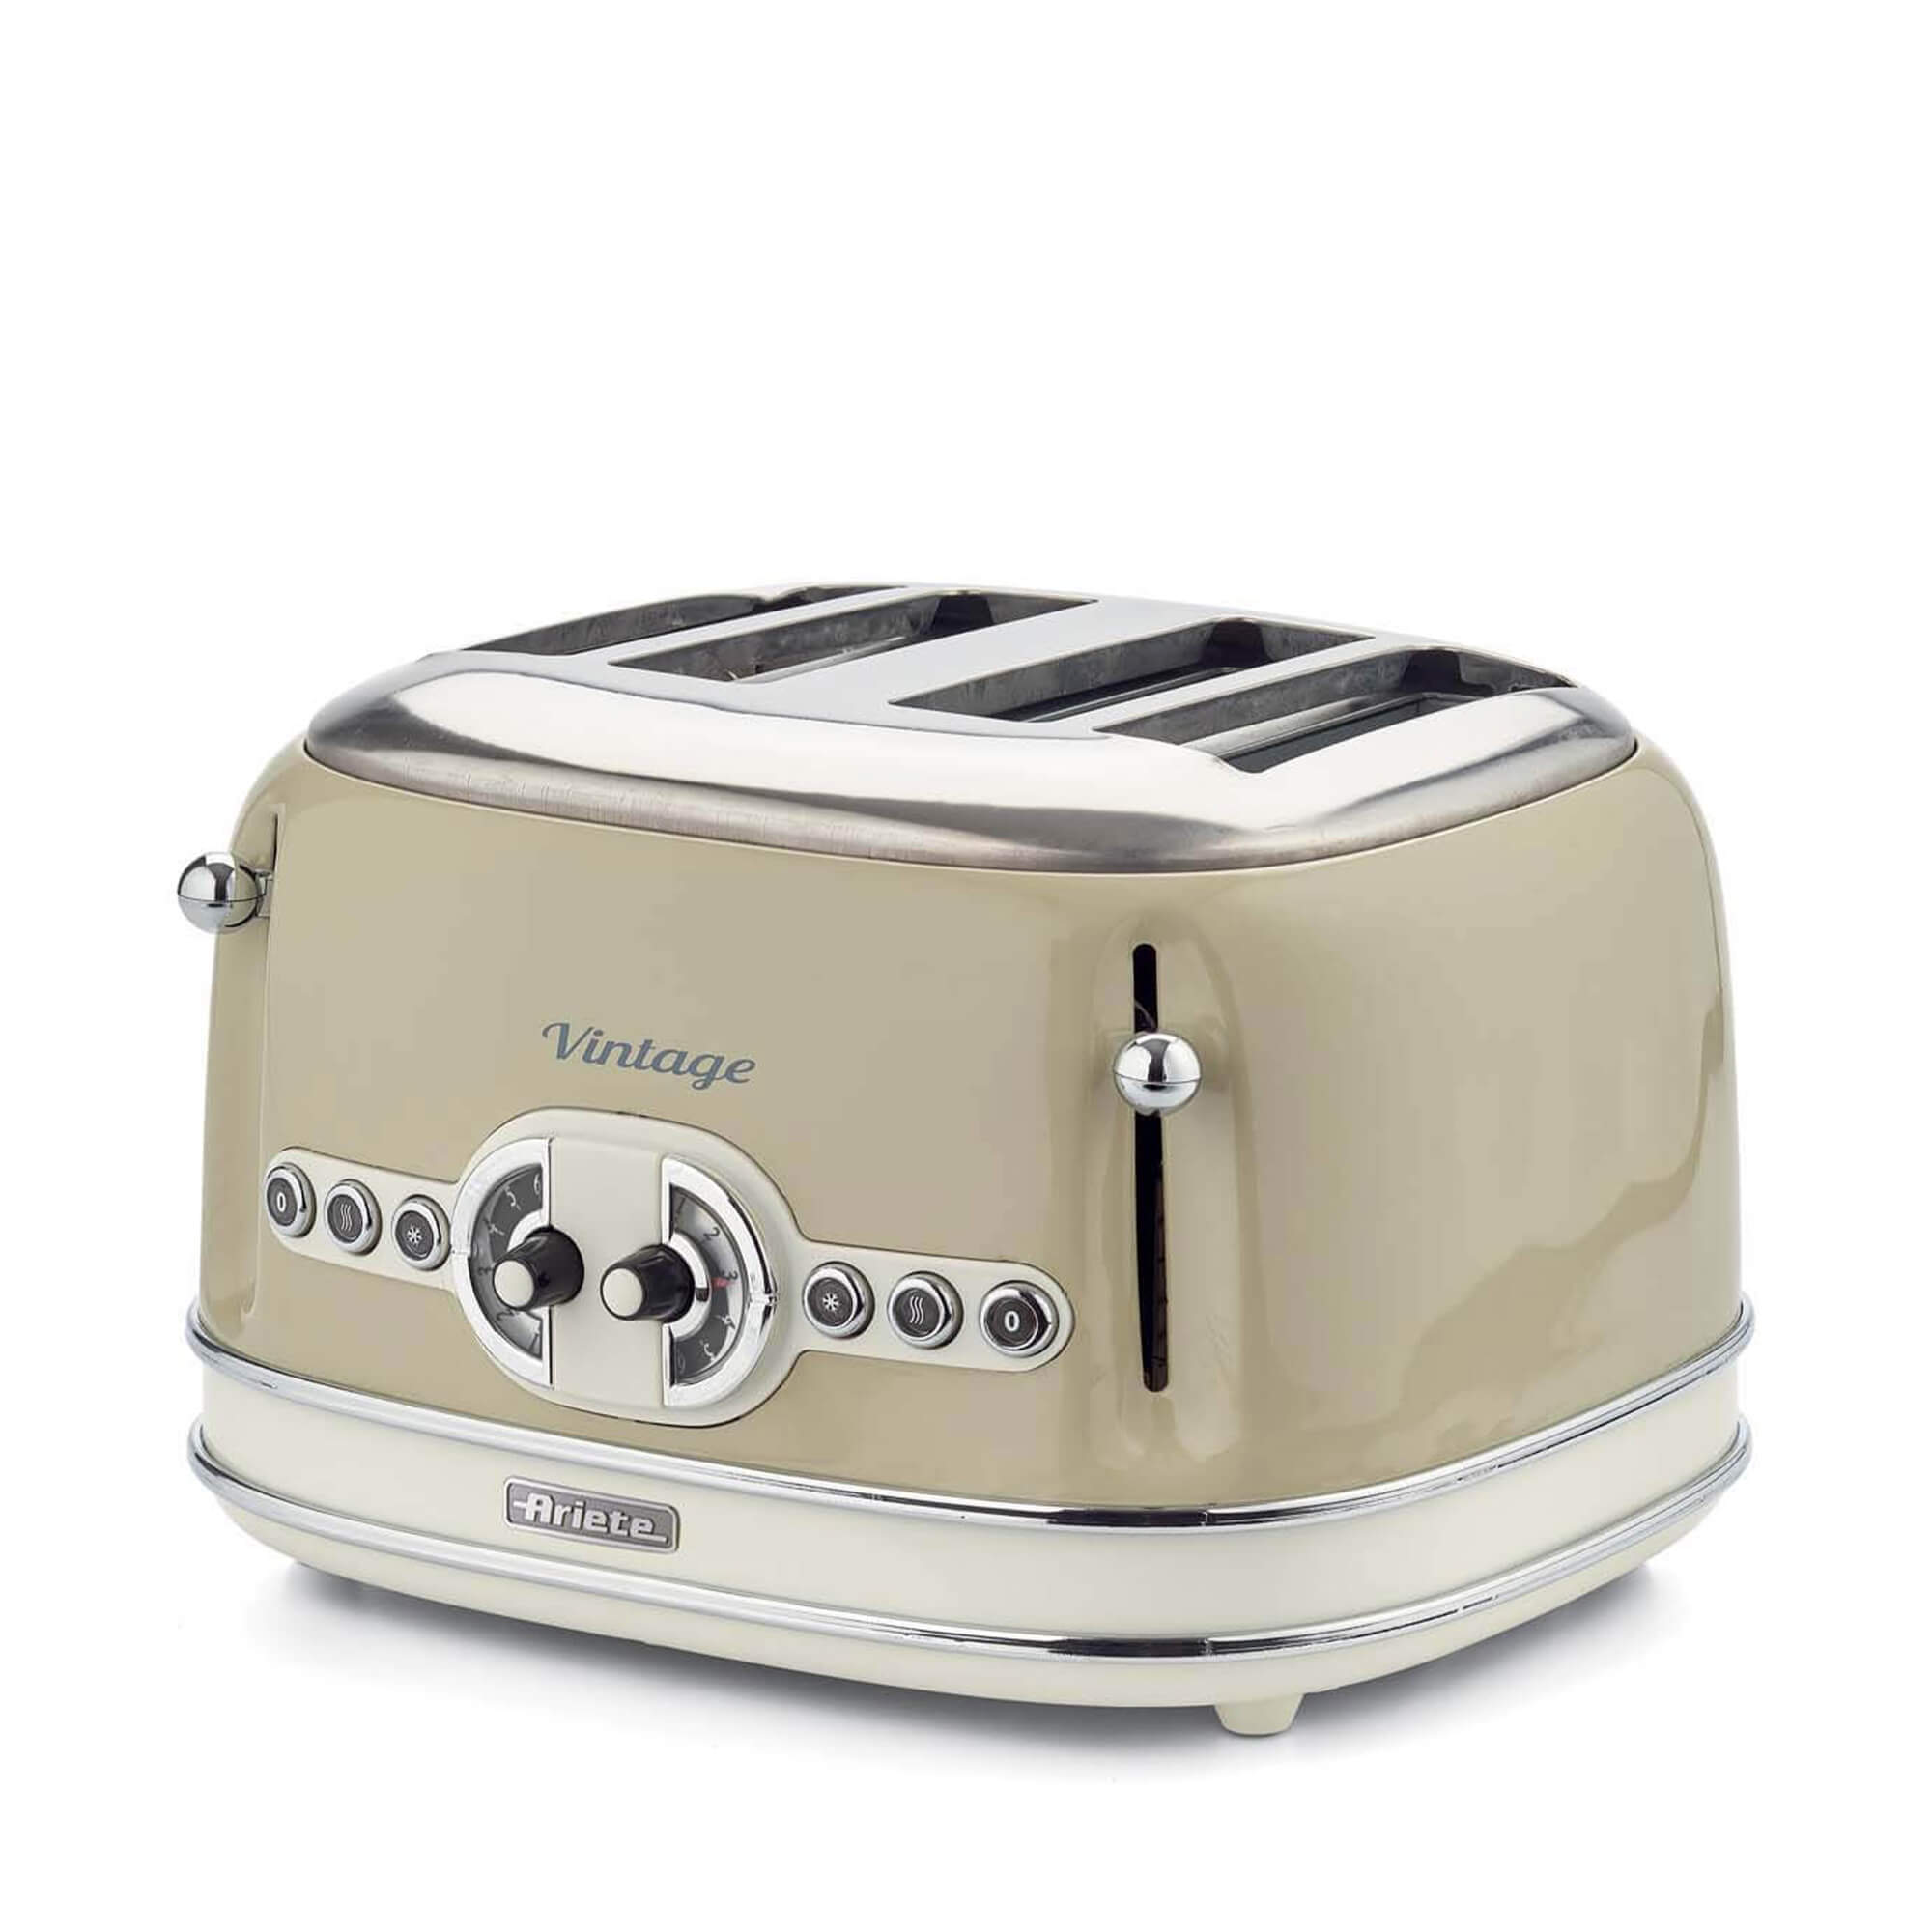 toaster Beige toasting, heating and defrosting | Vintage Toaster |